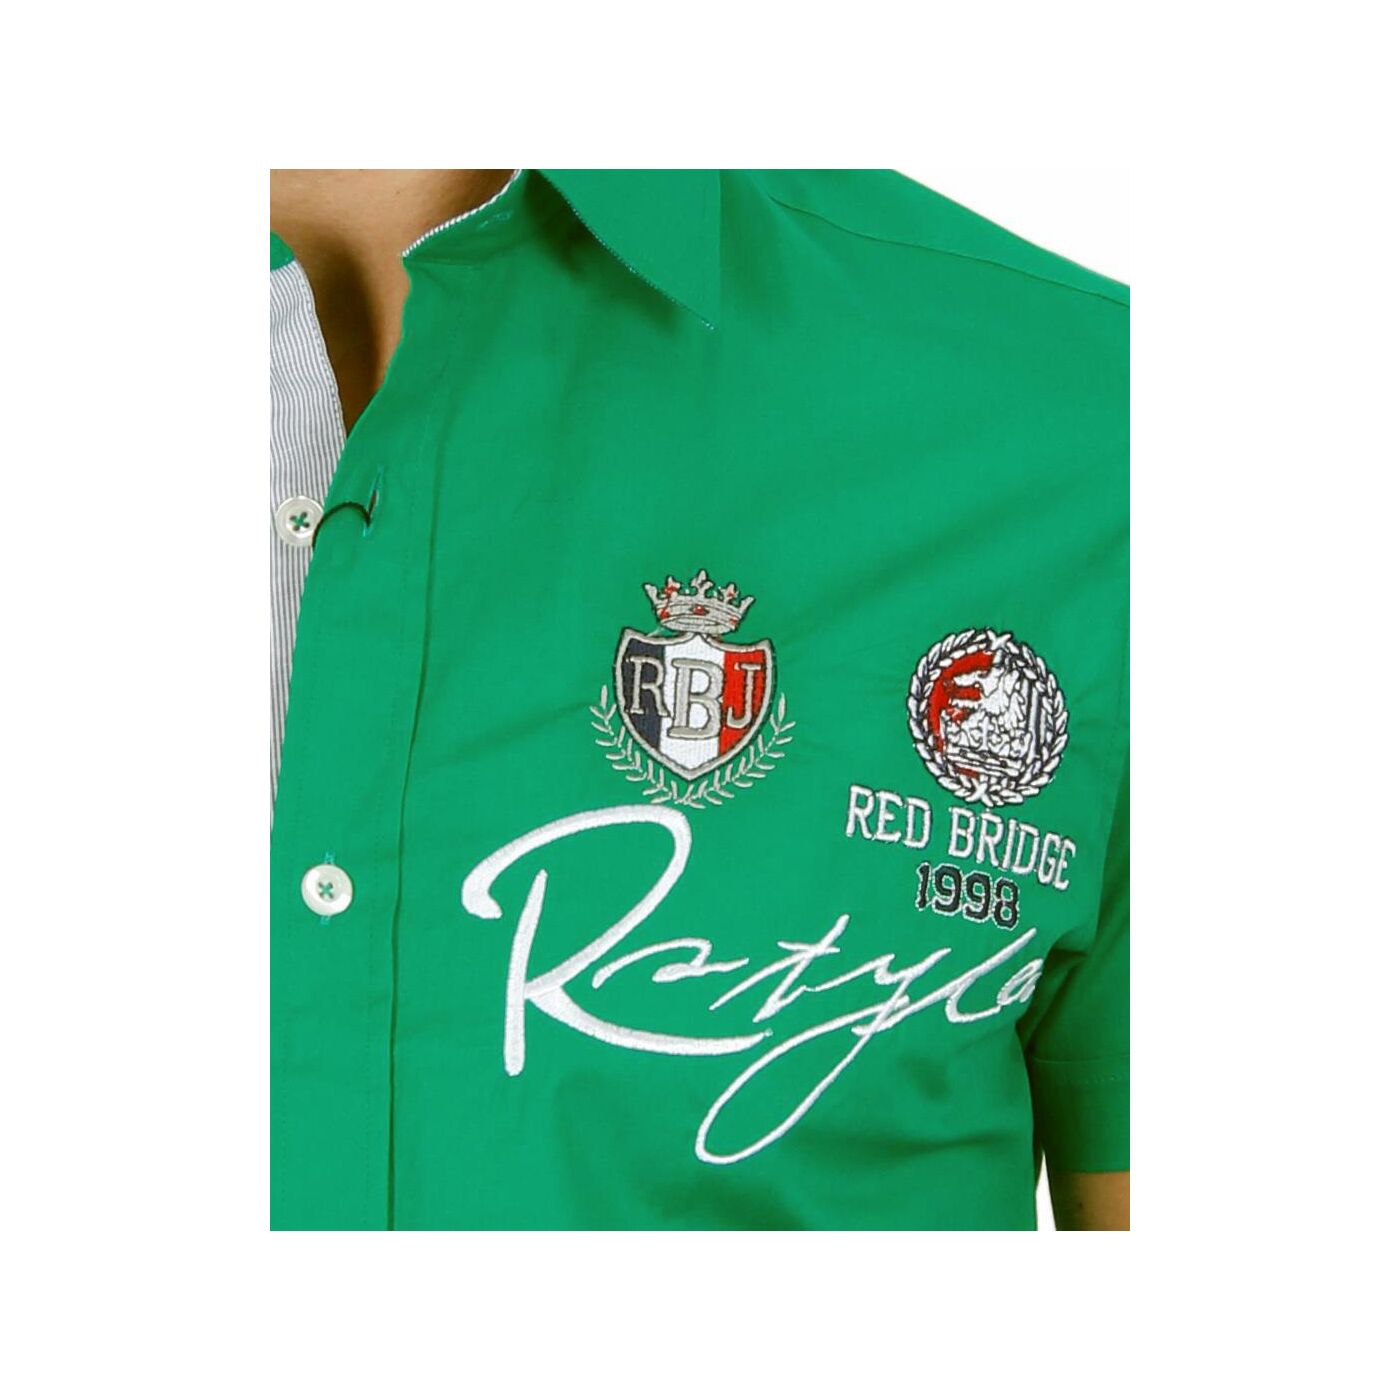 Red Bridge Herren Design € R-Style , - Fit Hemd grün kurzarm R-2122 Slim 22,90